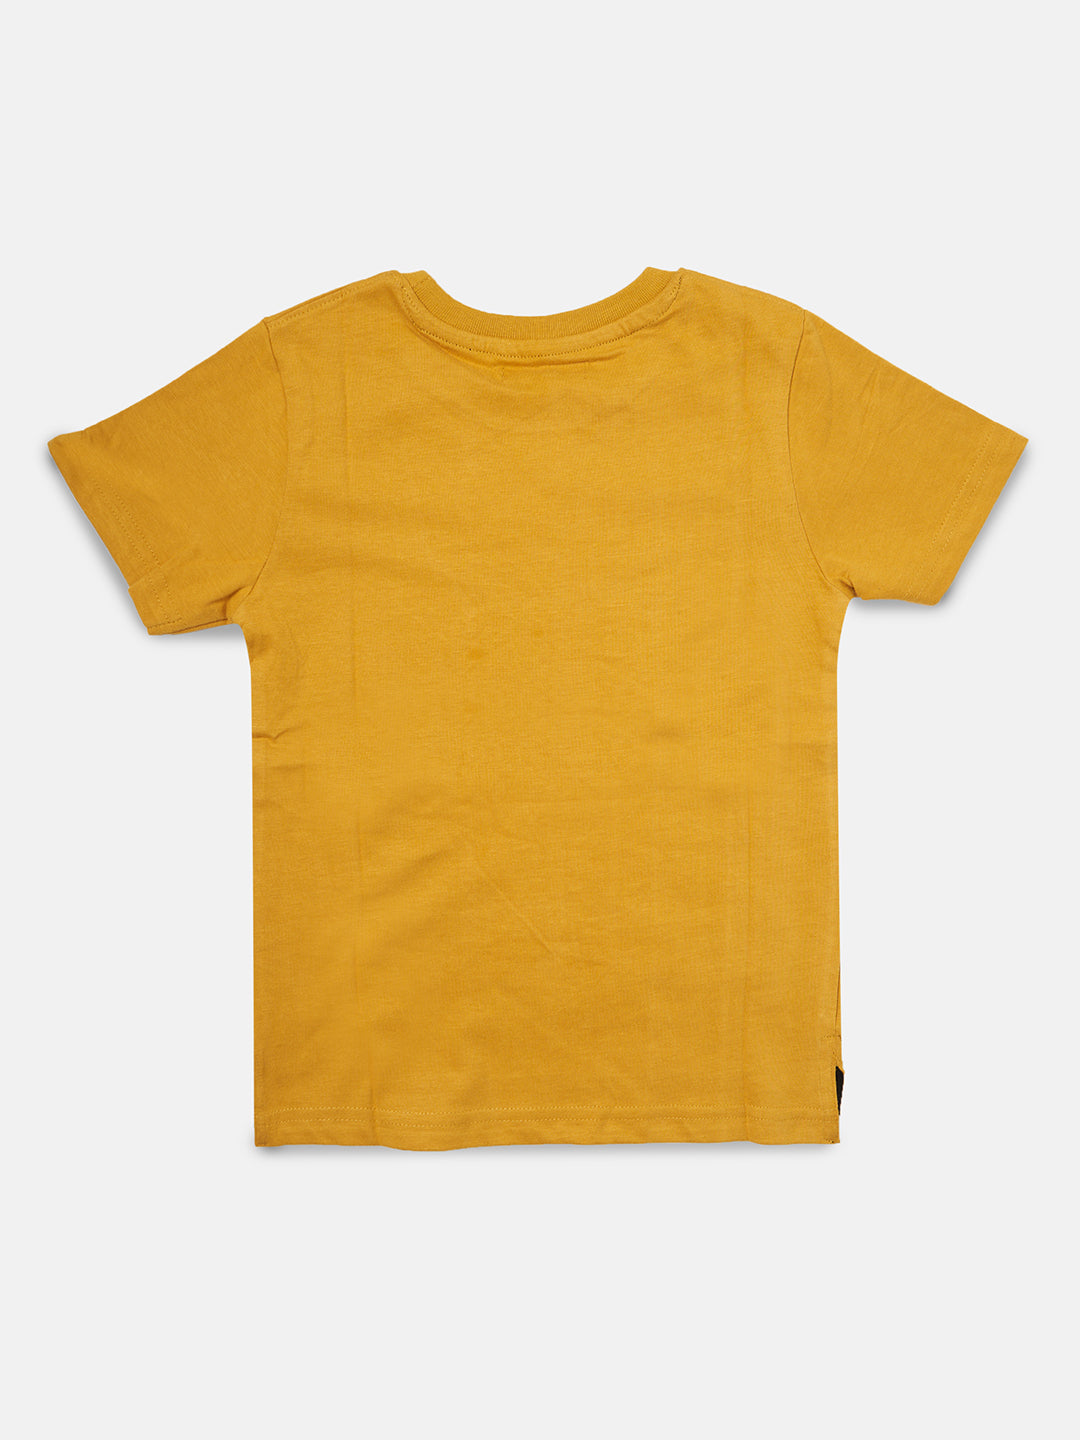 Boys Yellow Dinosaur Printed Graphic T-Shirt